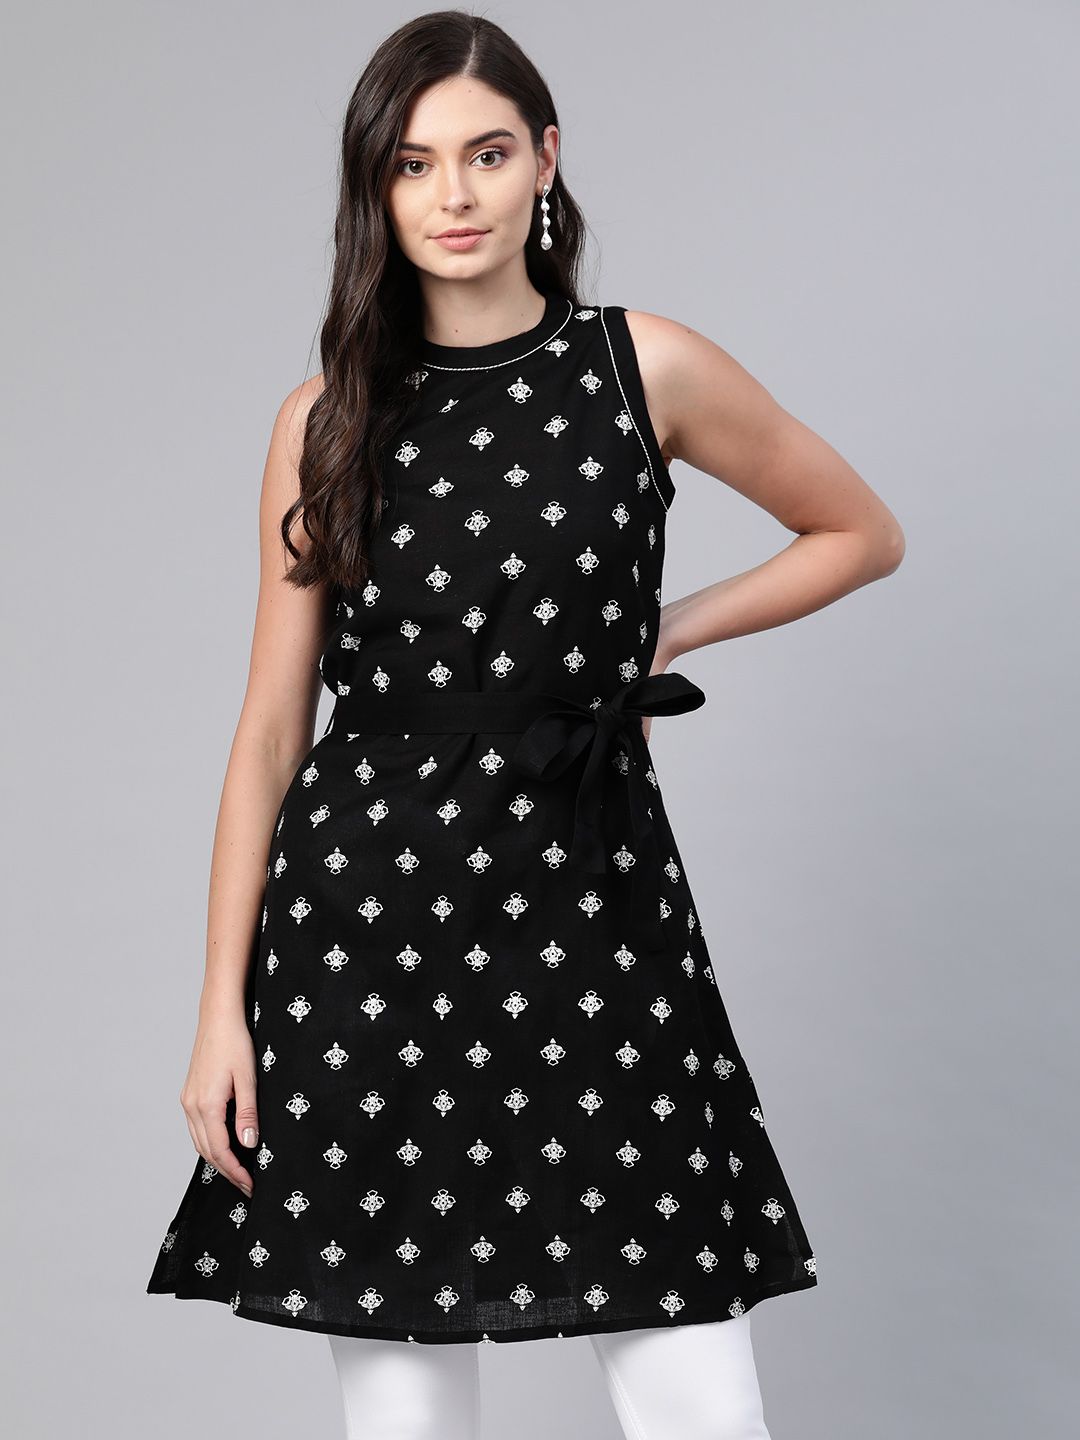 Global Desi Women's Black & White Printed Ecovero Tunic Price in India